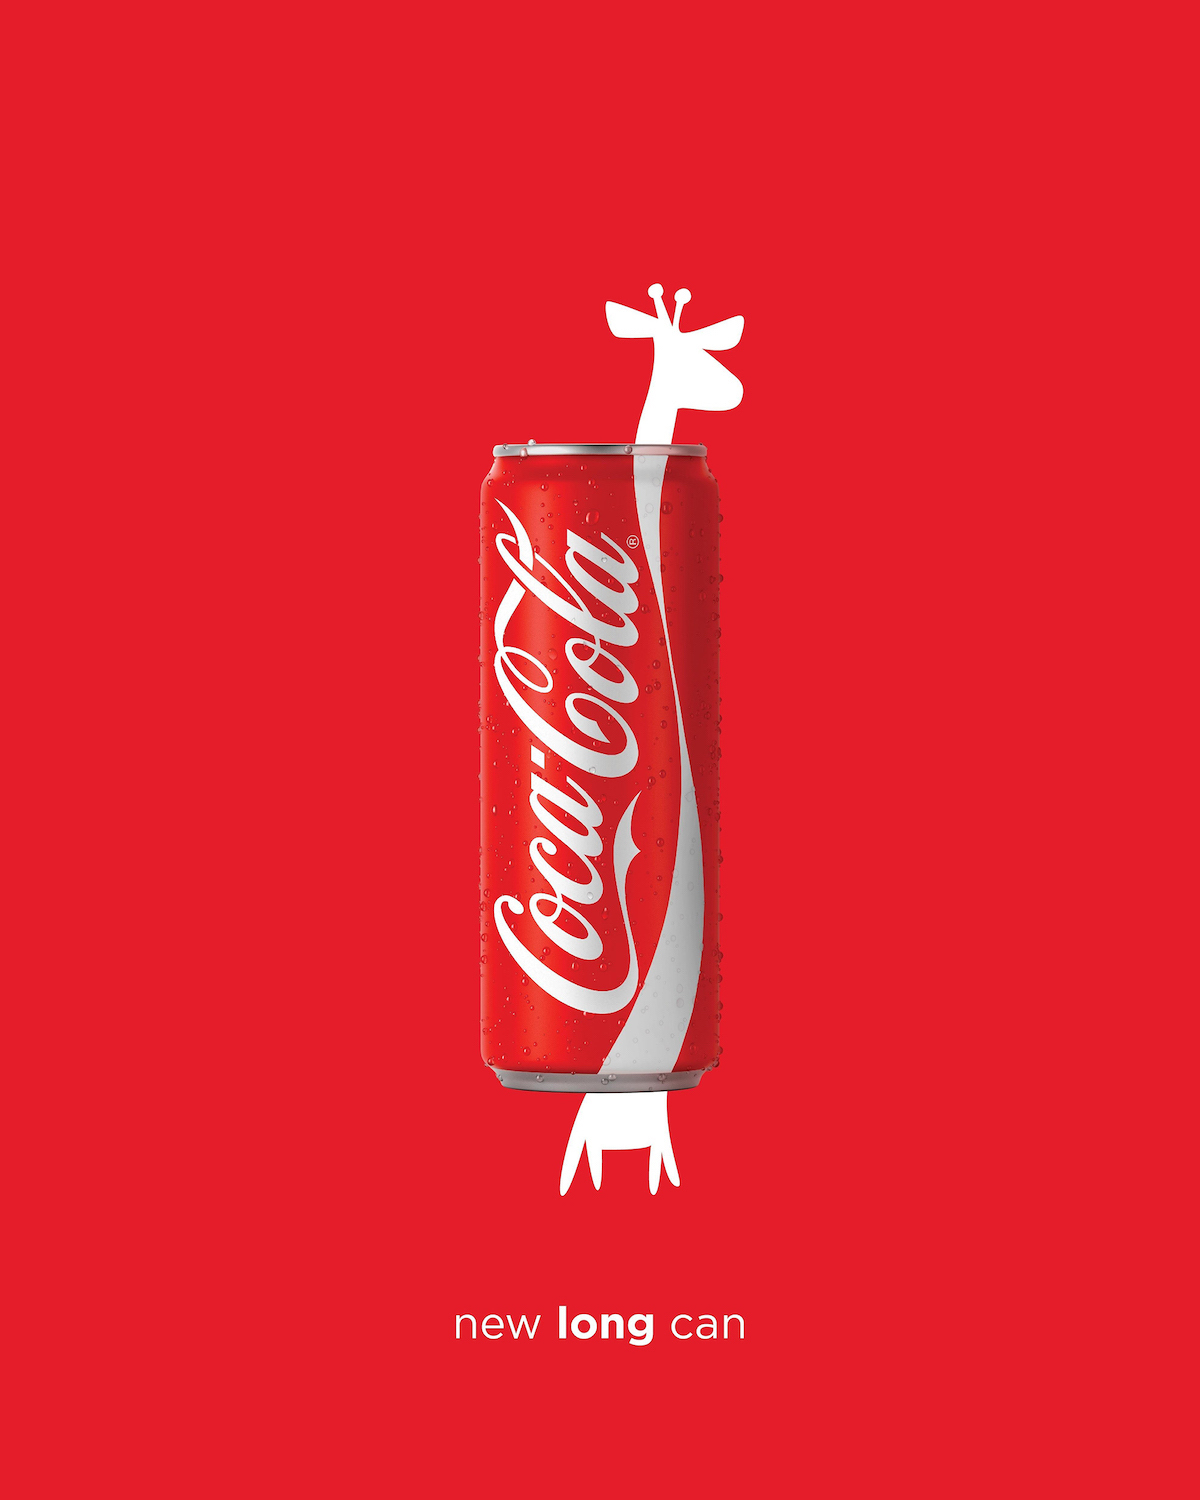 Creative Ads: Coke Long Can